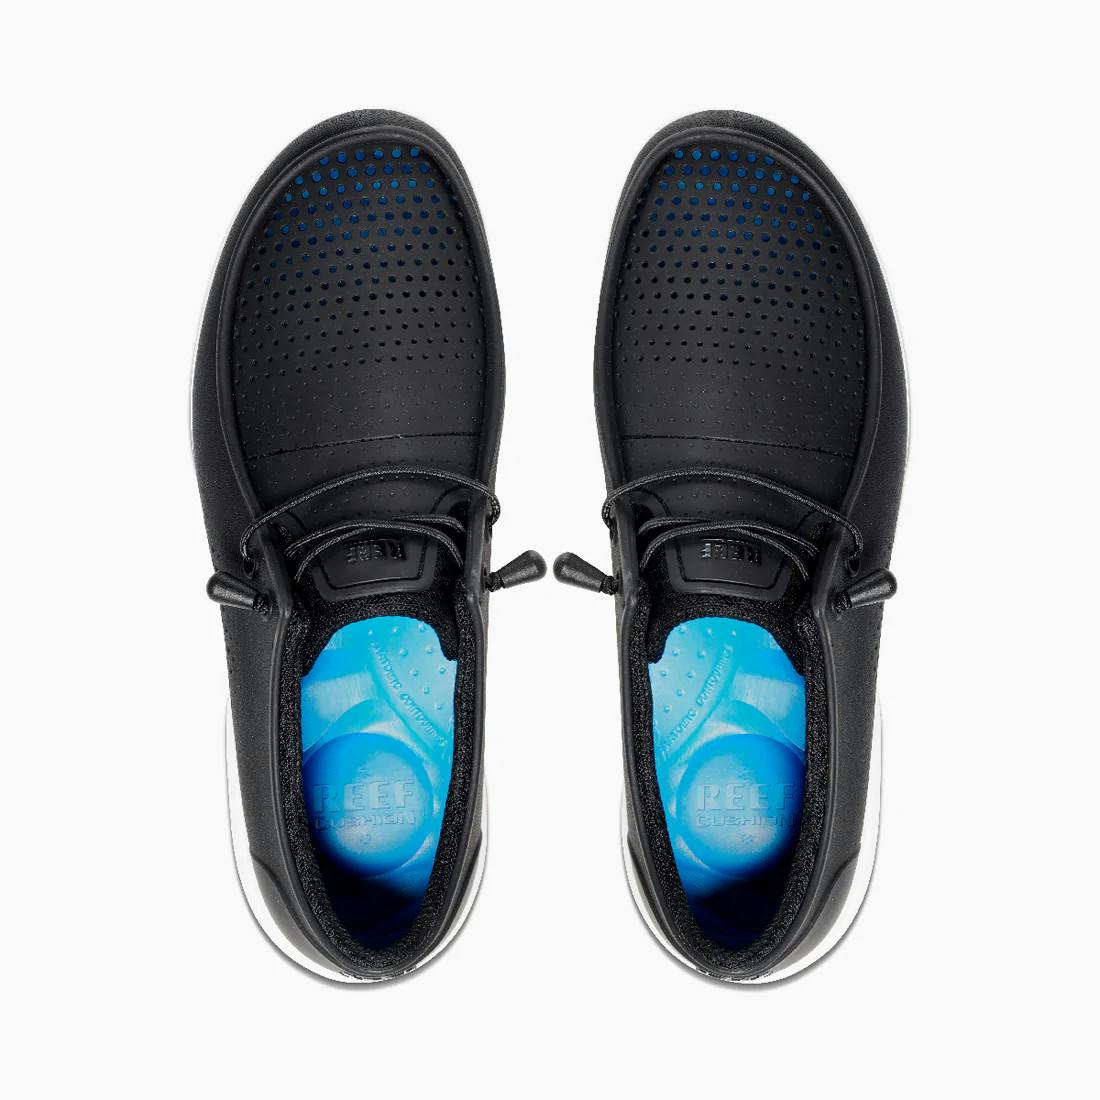 REEF Water Coast Shoes (Men’s) Top - Black